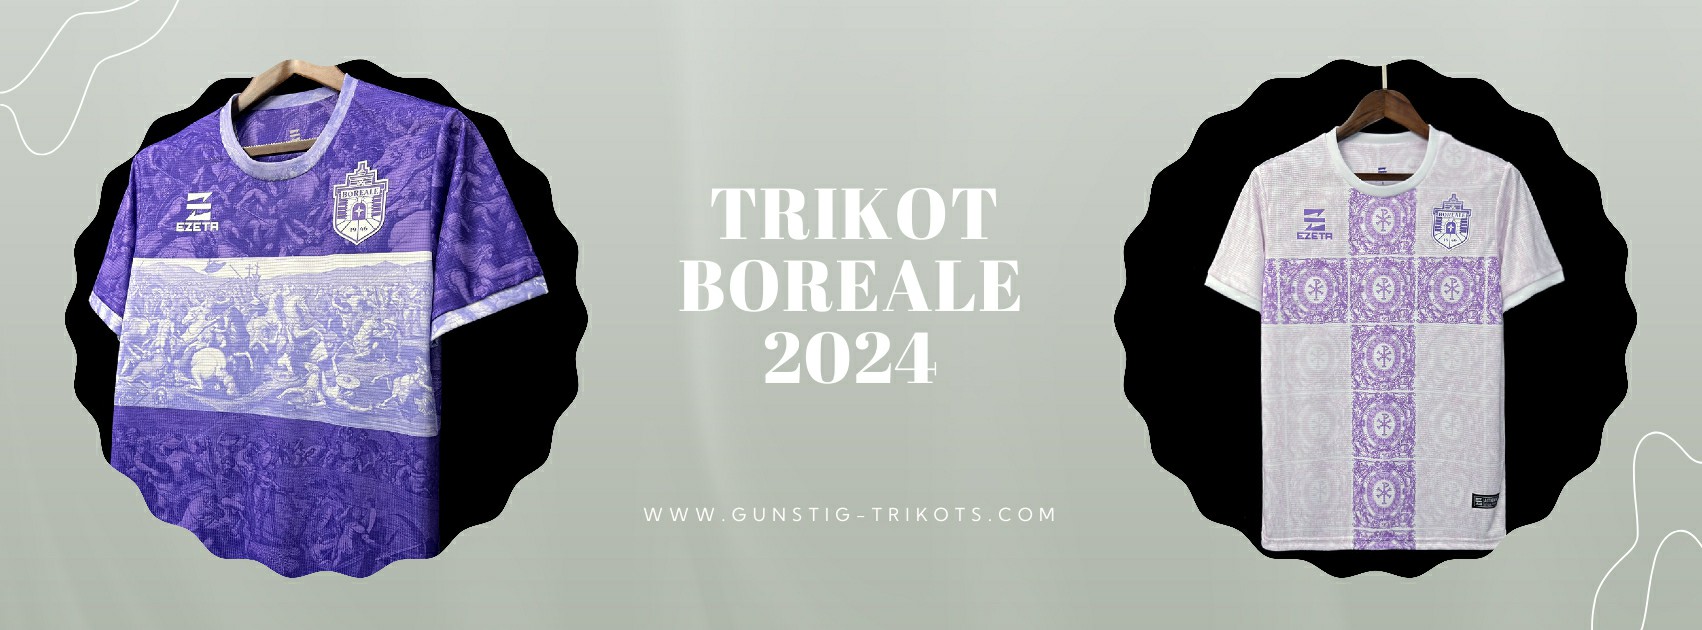 Boreale Trikot 2024-2025